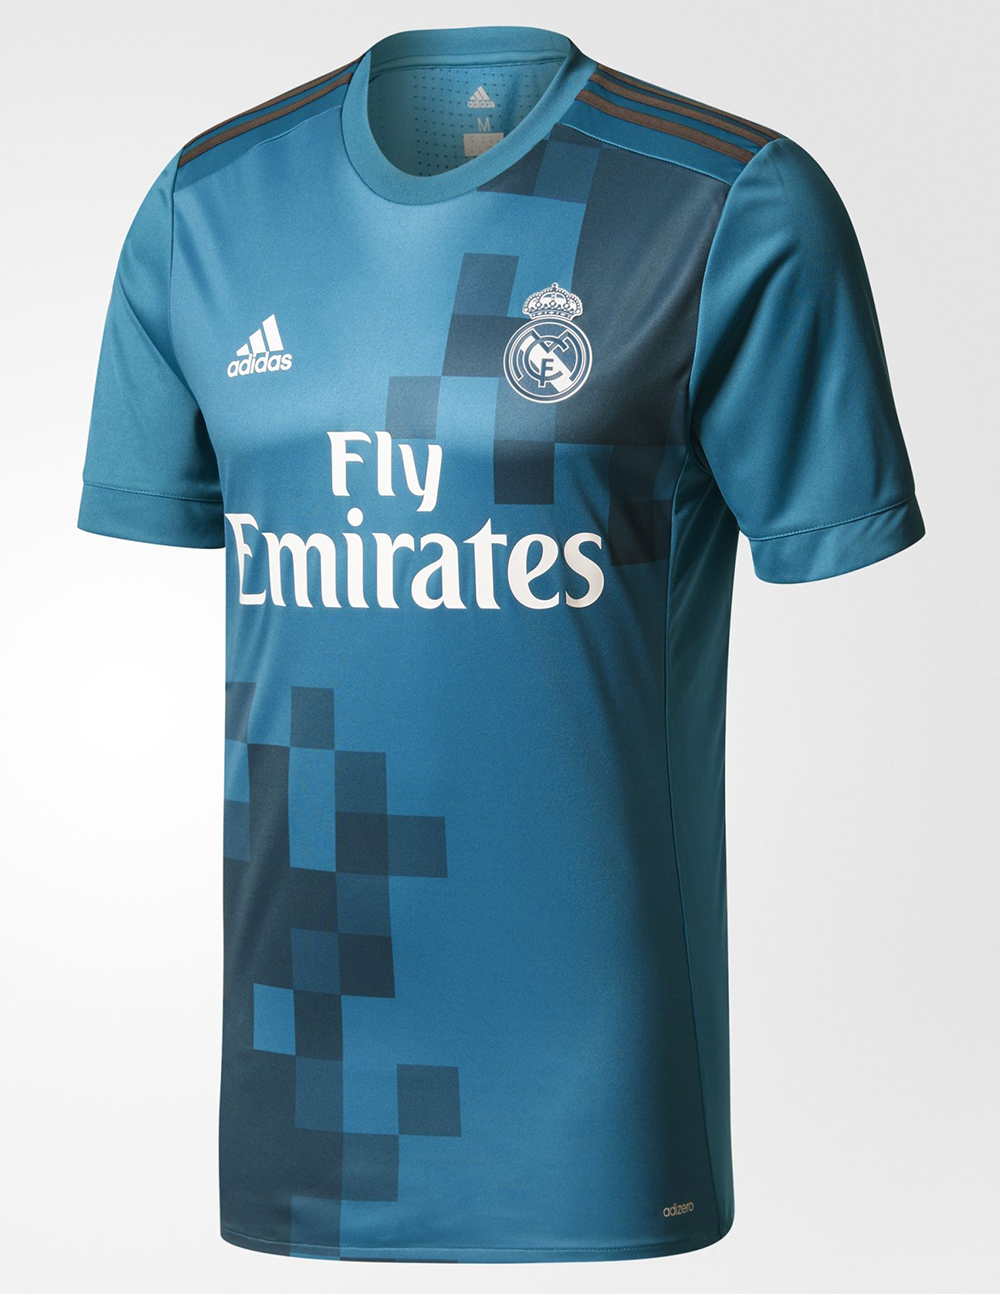 Tercera camiseta adidas del Real Madrid 2017 18